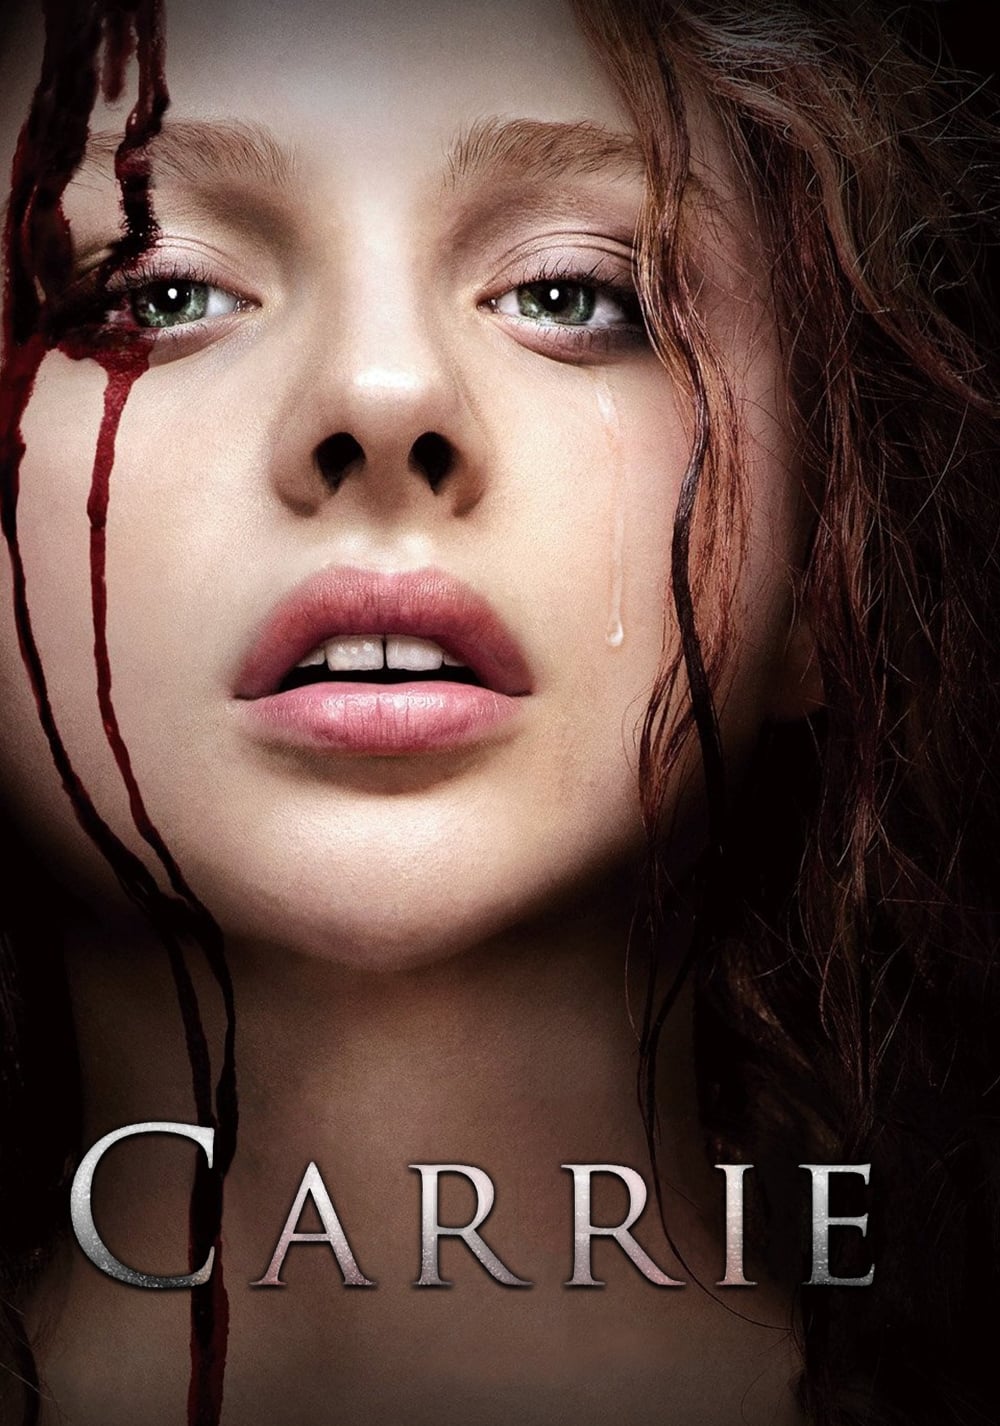 2013 Carrie